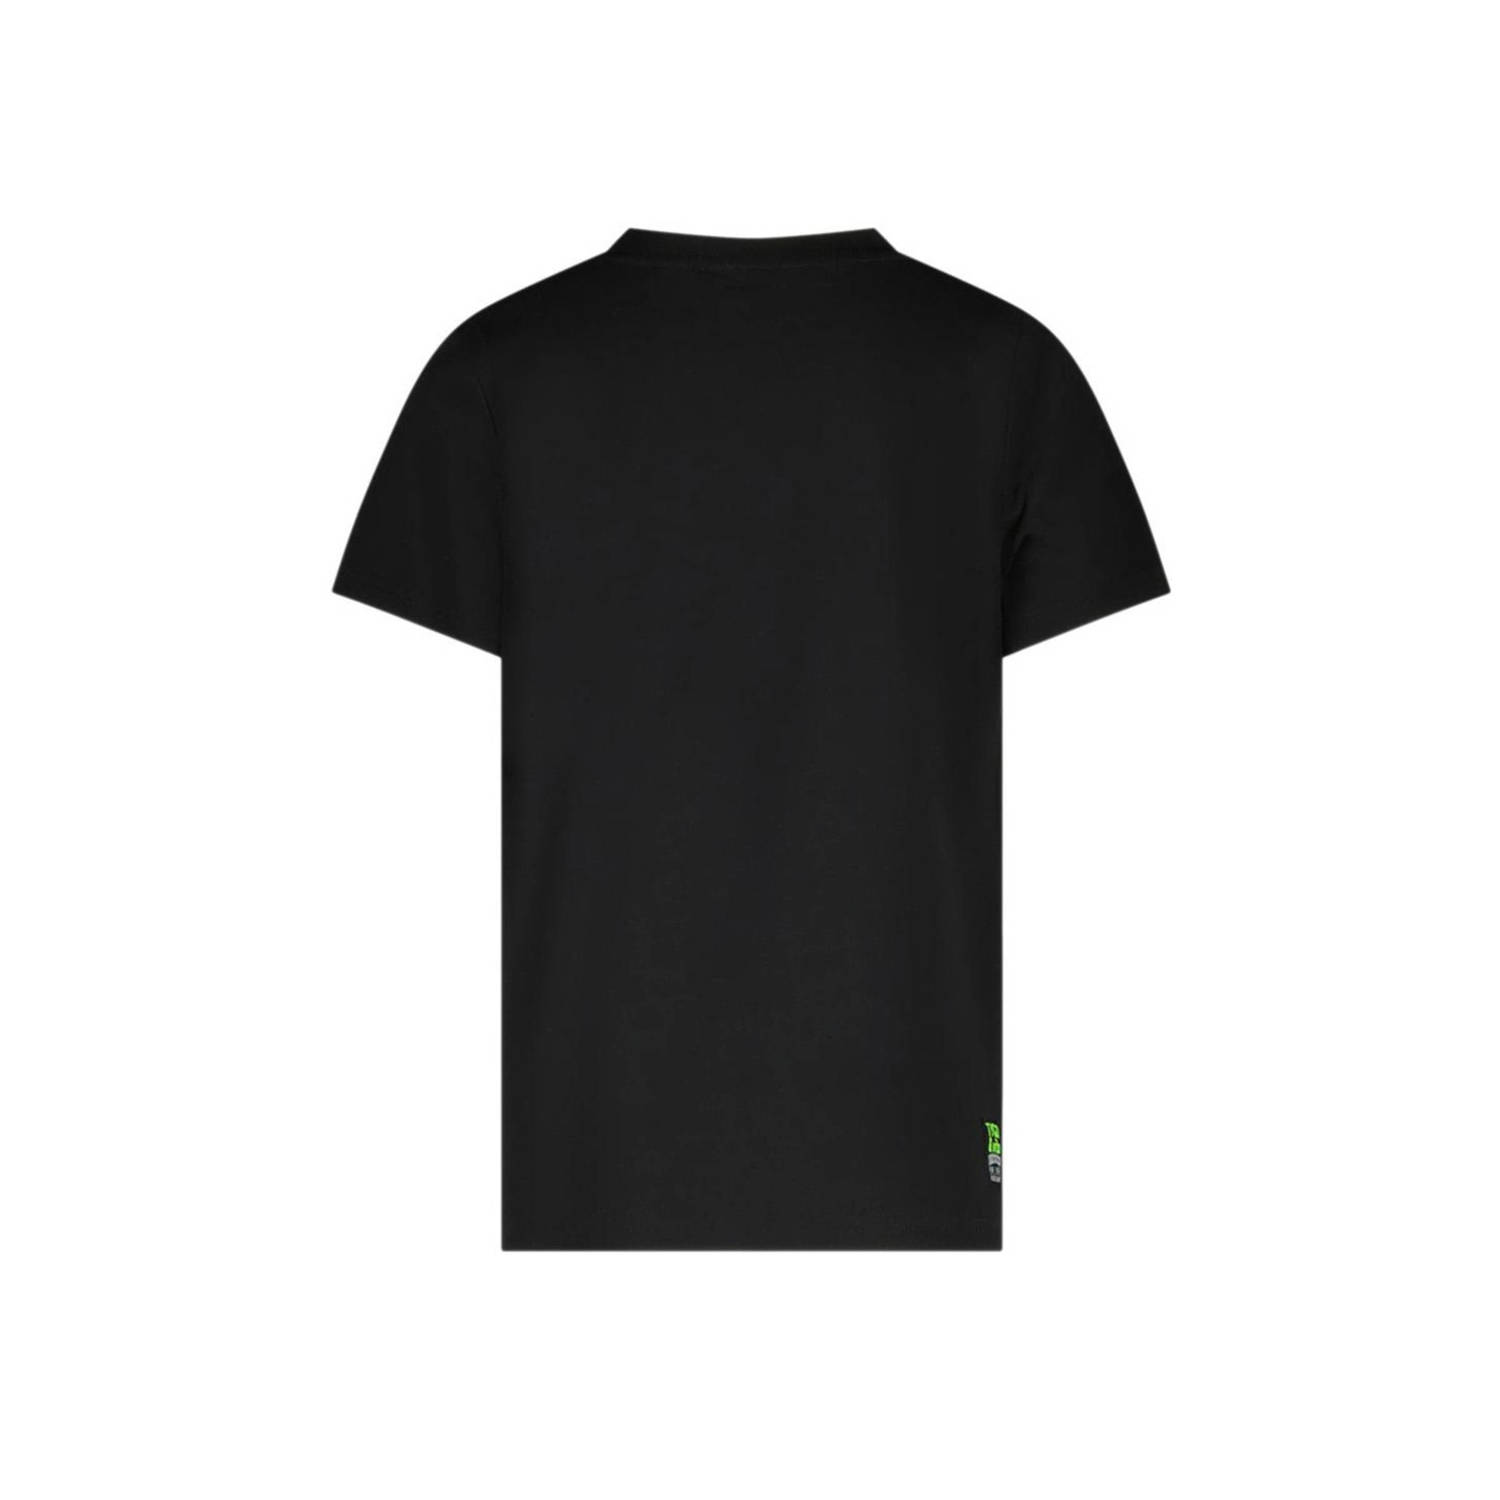 TYGO & vito T-shirt Toby met printopdruk zwart groen